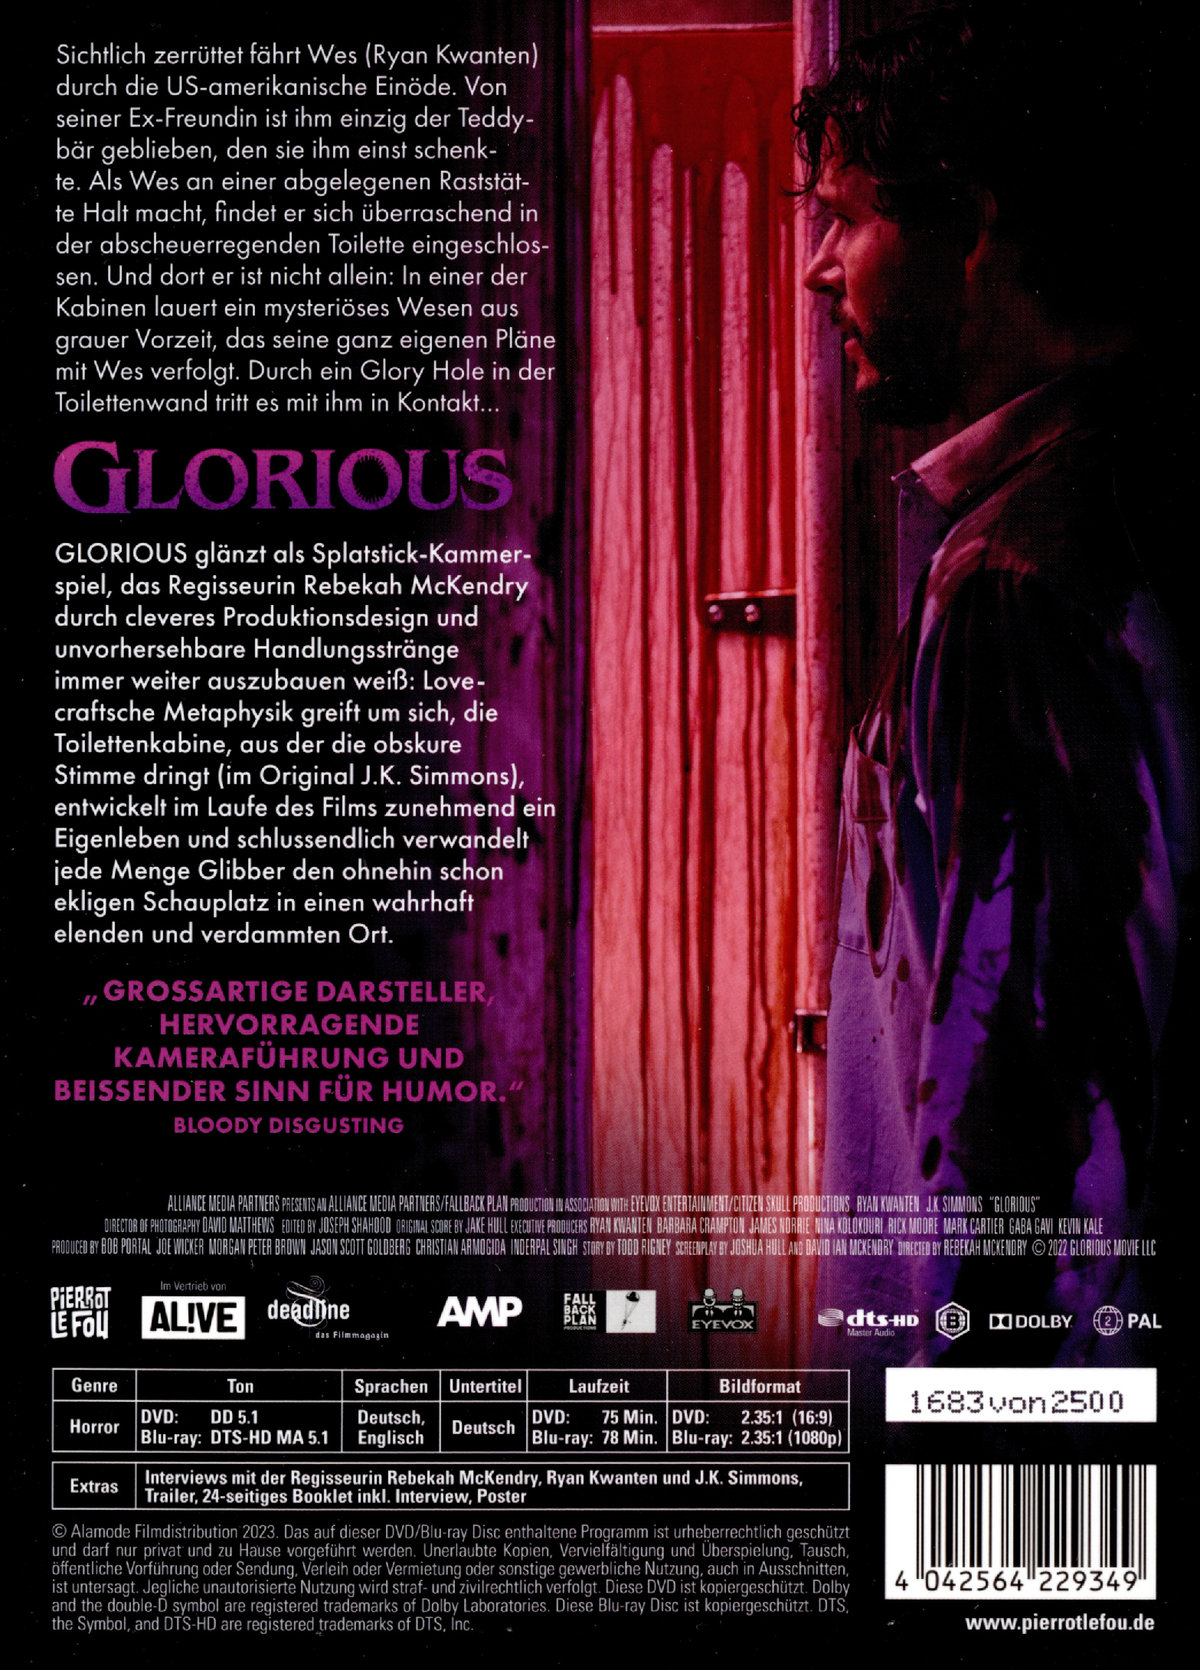 Glorious - Uncut Mediabook Edition (DVD+blu-ray)